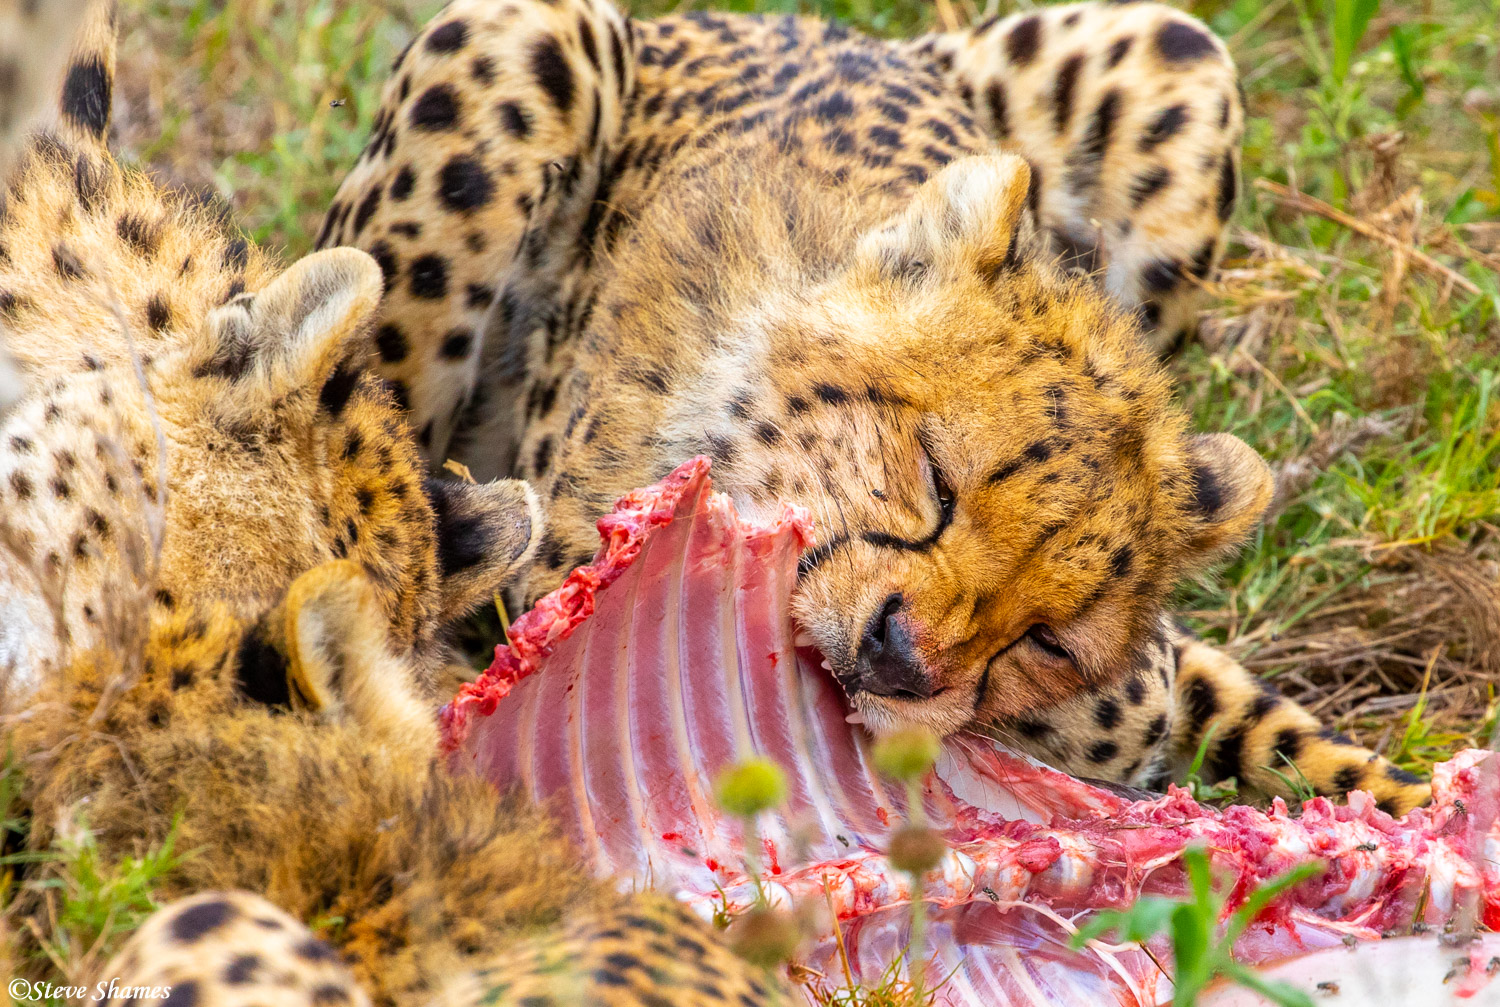 Cheetah crunching through wildebeest ribs.